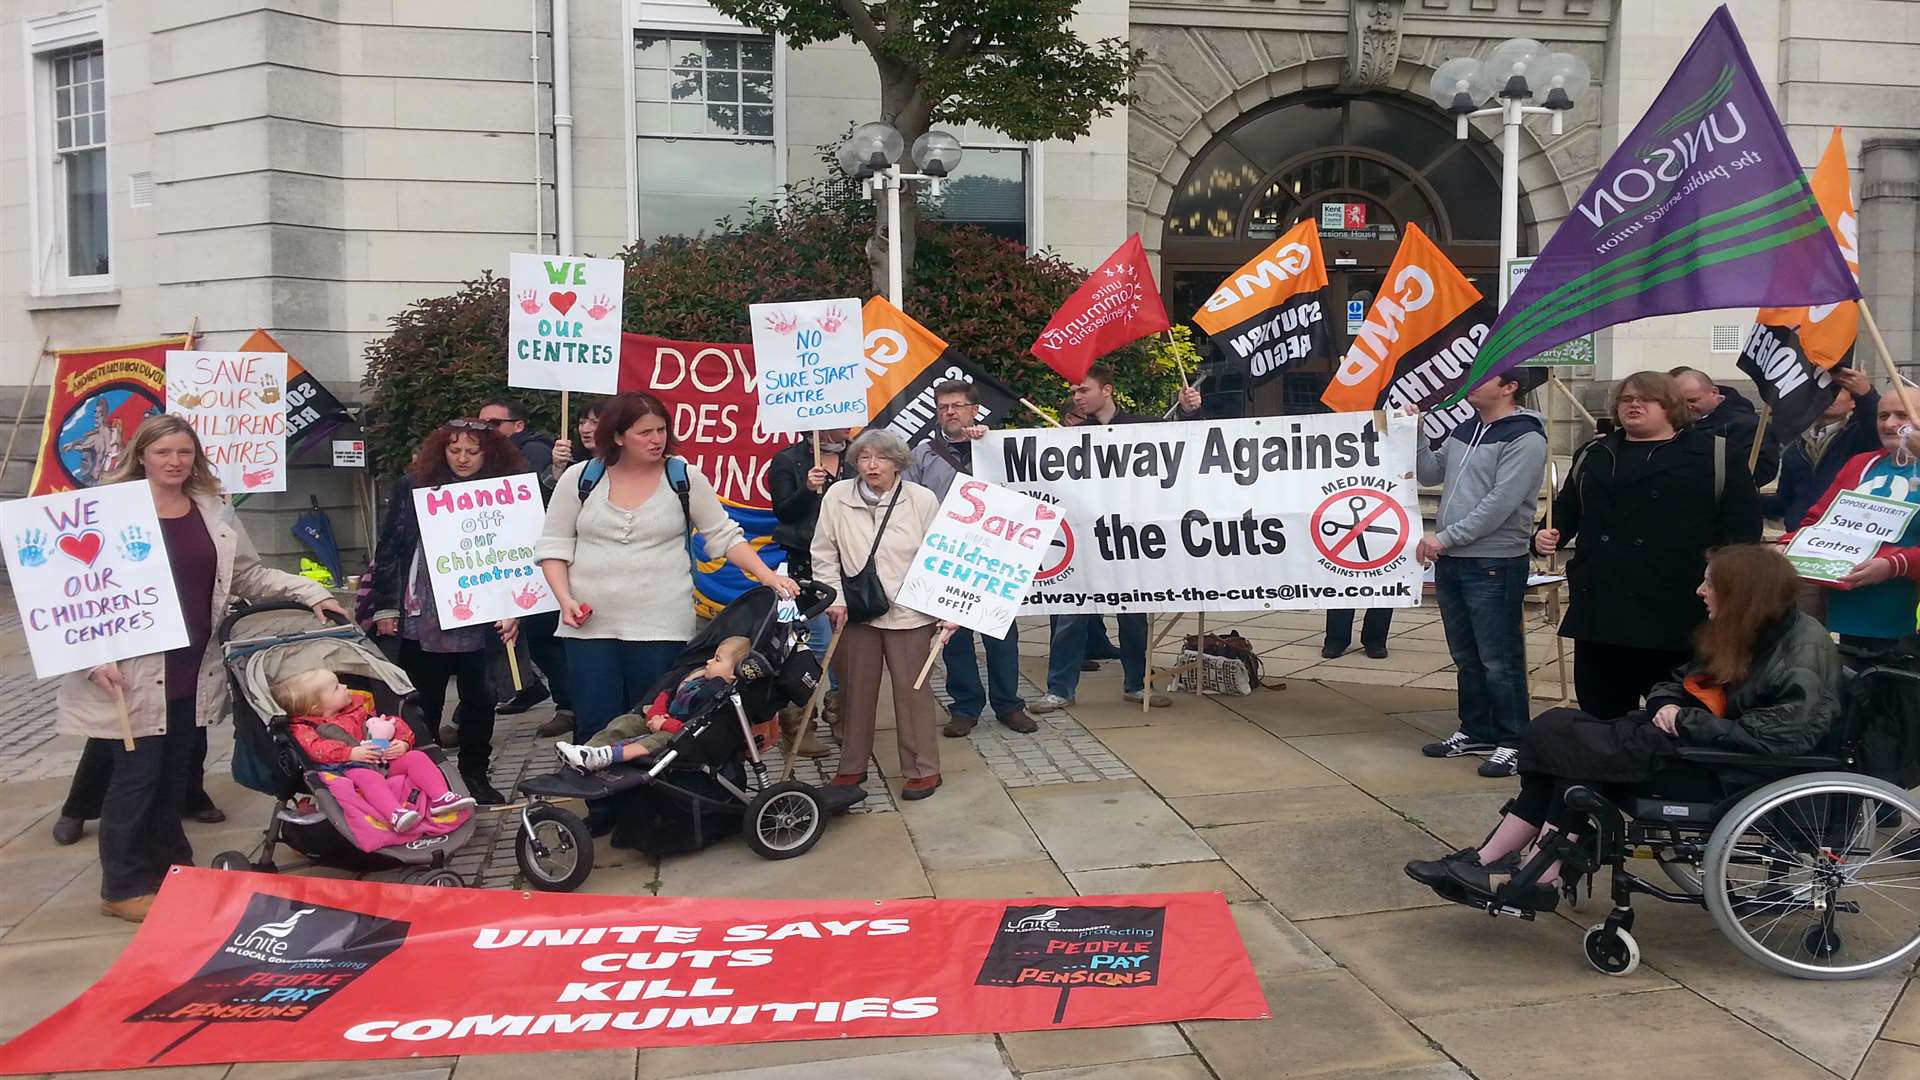 A protest against children's centre closures in Maidstone